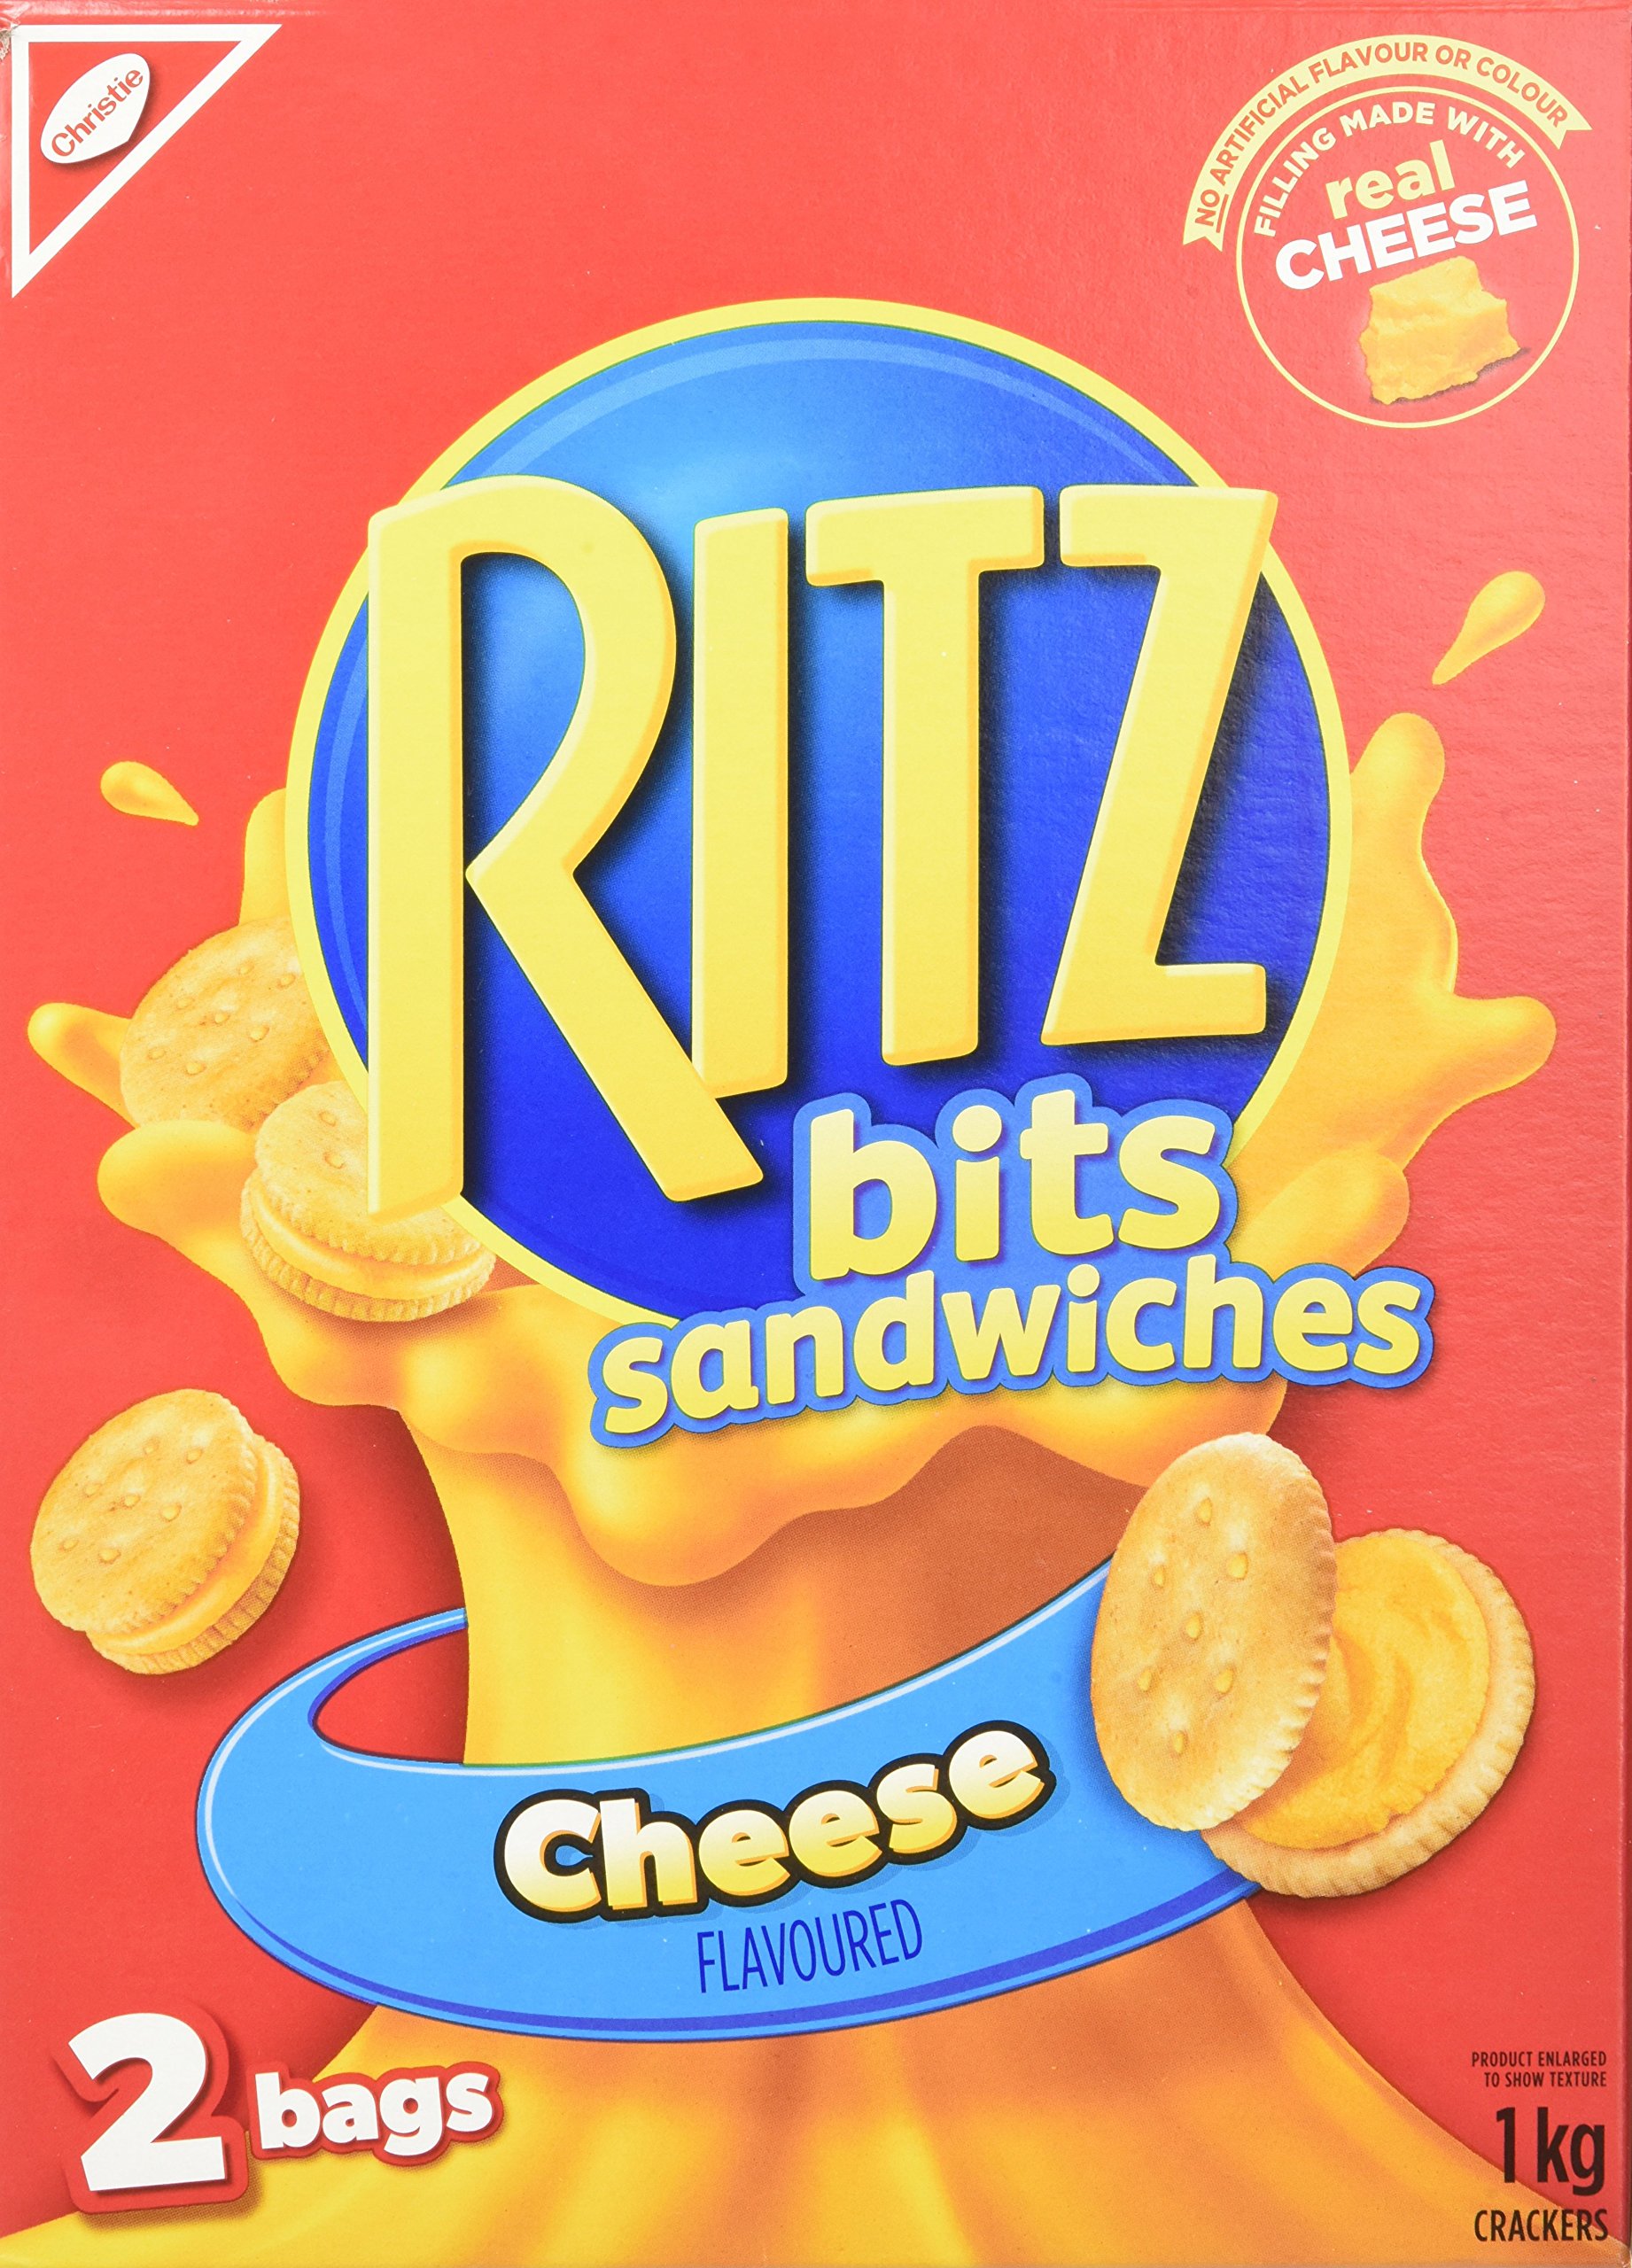 ritz bits cheese ers